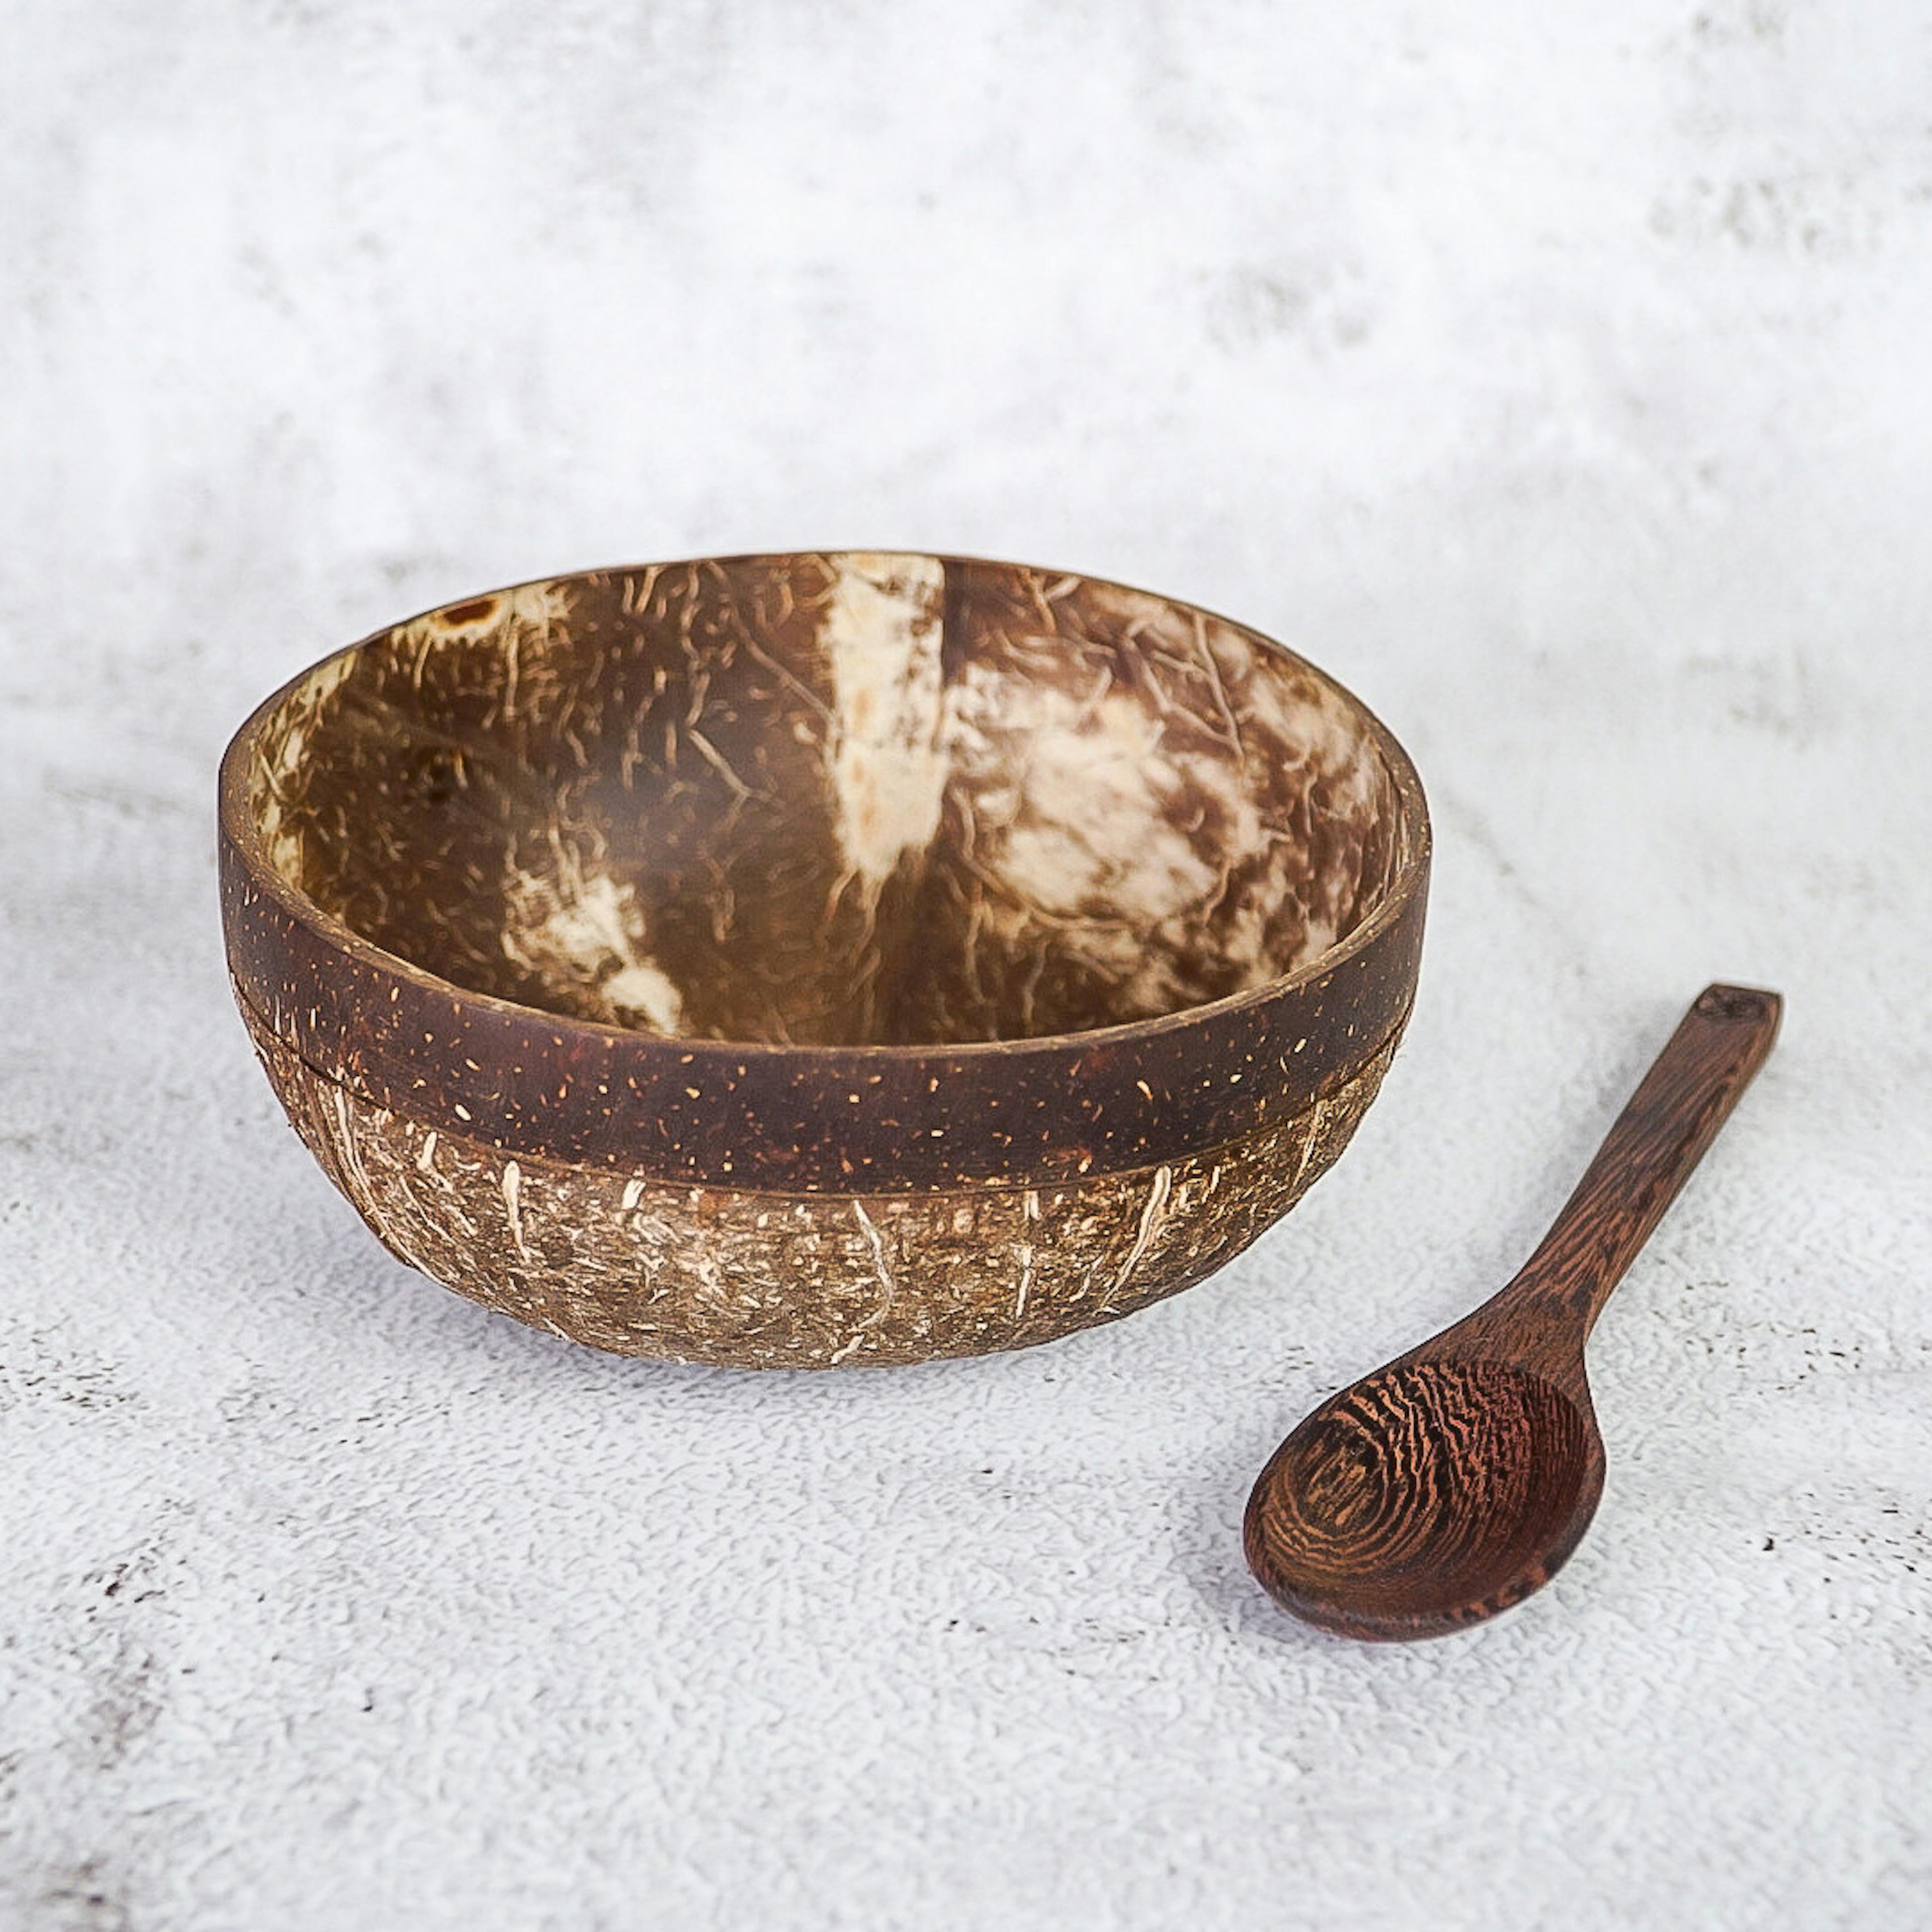 Coconut Smoothie Bowl & Spoon Set